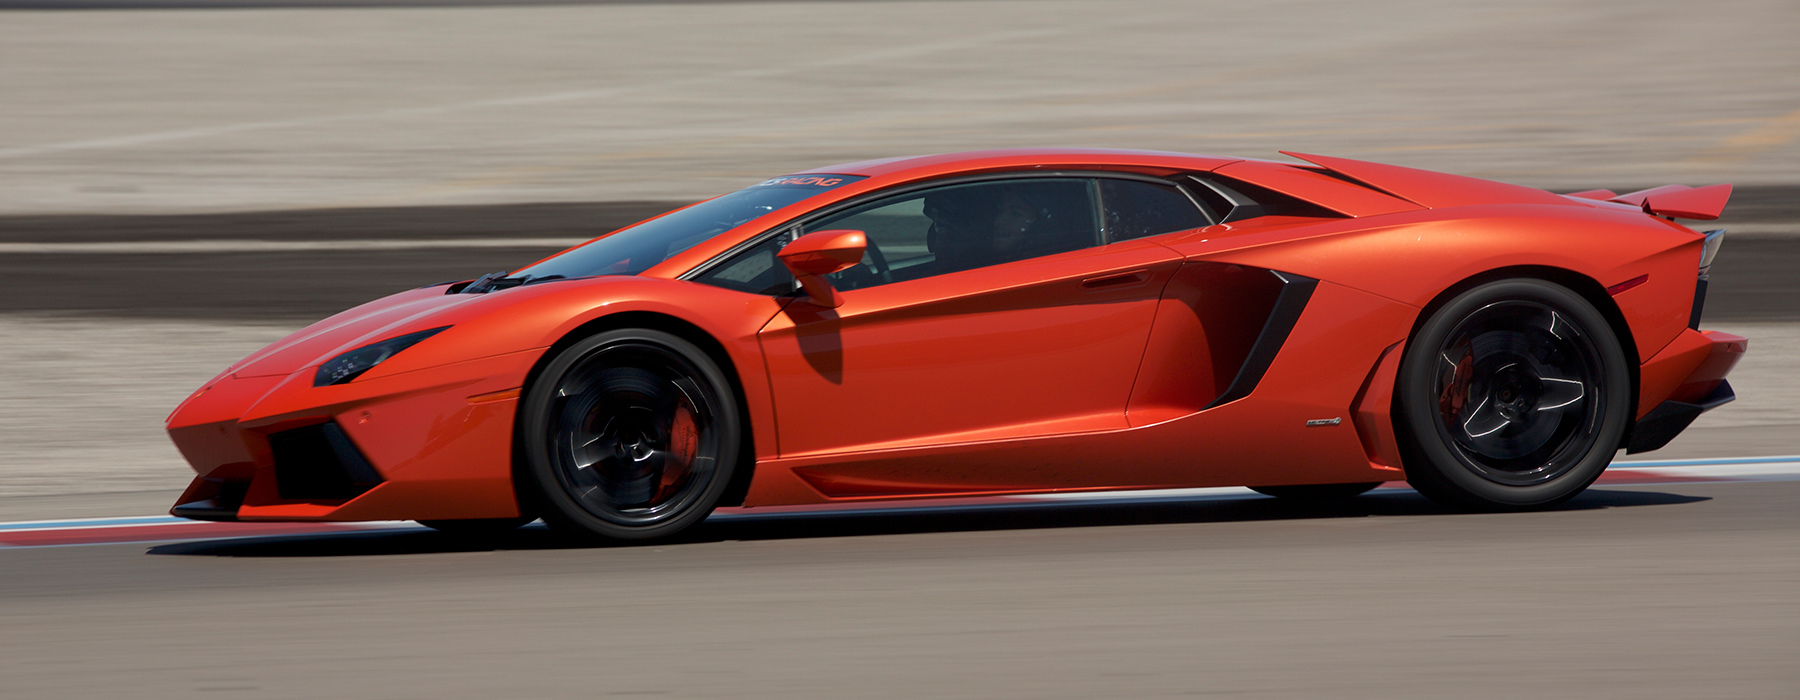 Drive a Lamborghini Supercar on a Professional Racetrack with Exotics Racing